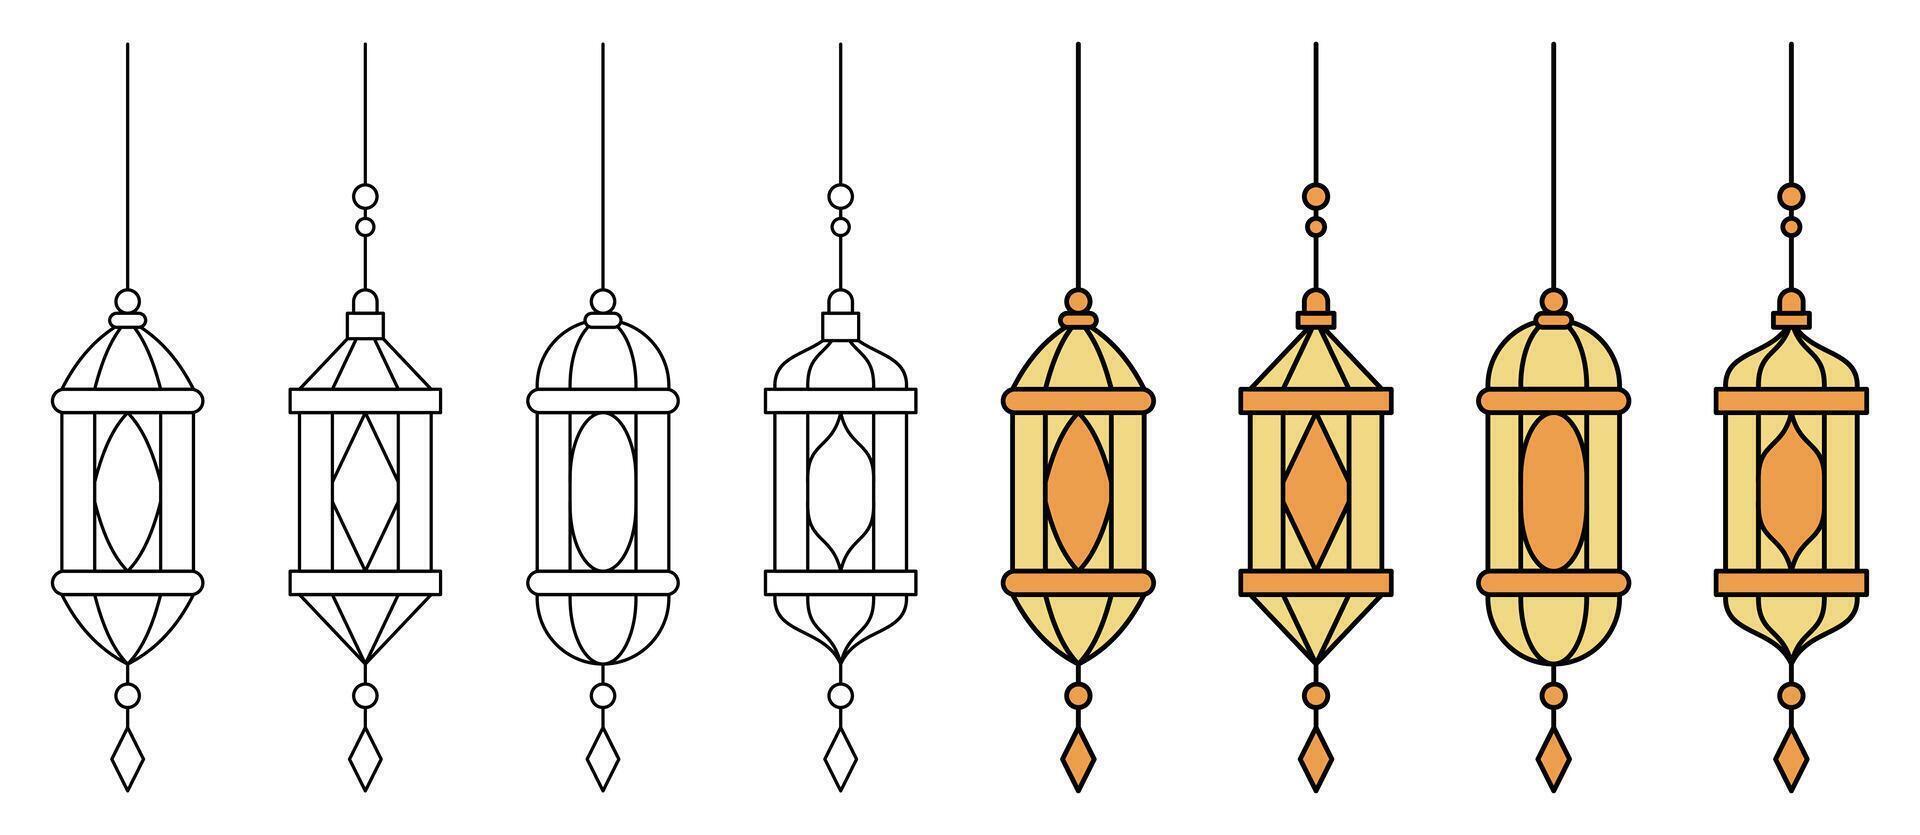 colección de Arábica linterna adornos, sencillo vector aislado en blanco antecedentes. islámico diseño elementos para saludo tarjetas, carteles, pancartas, social medios de comunicación.